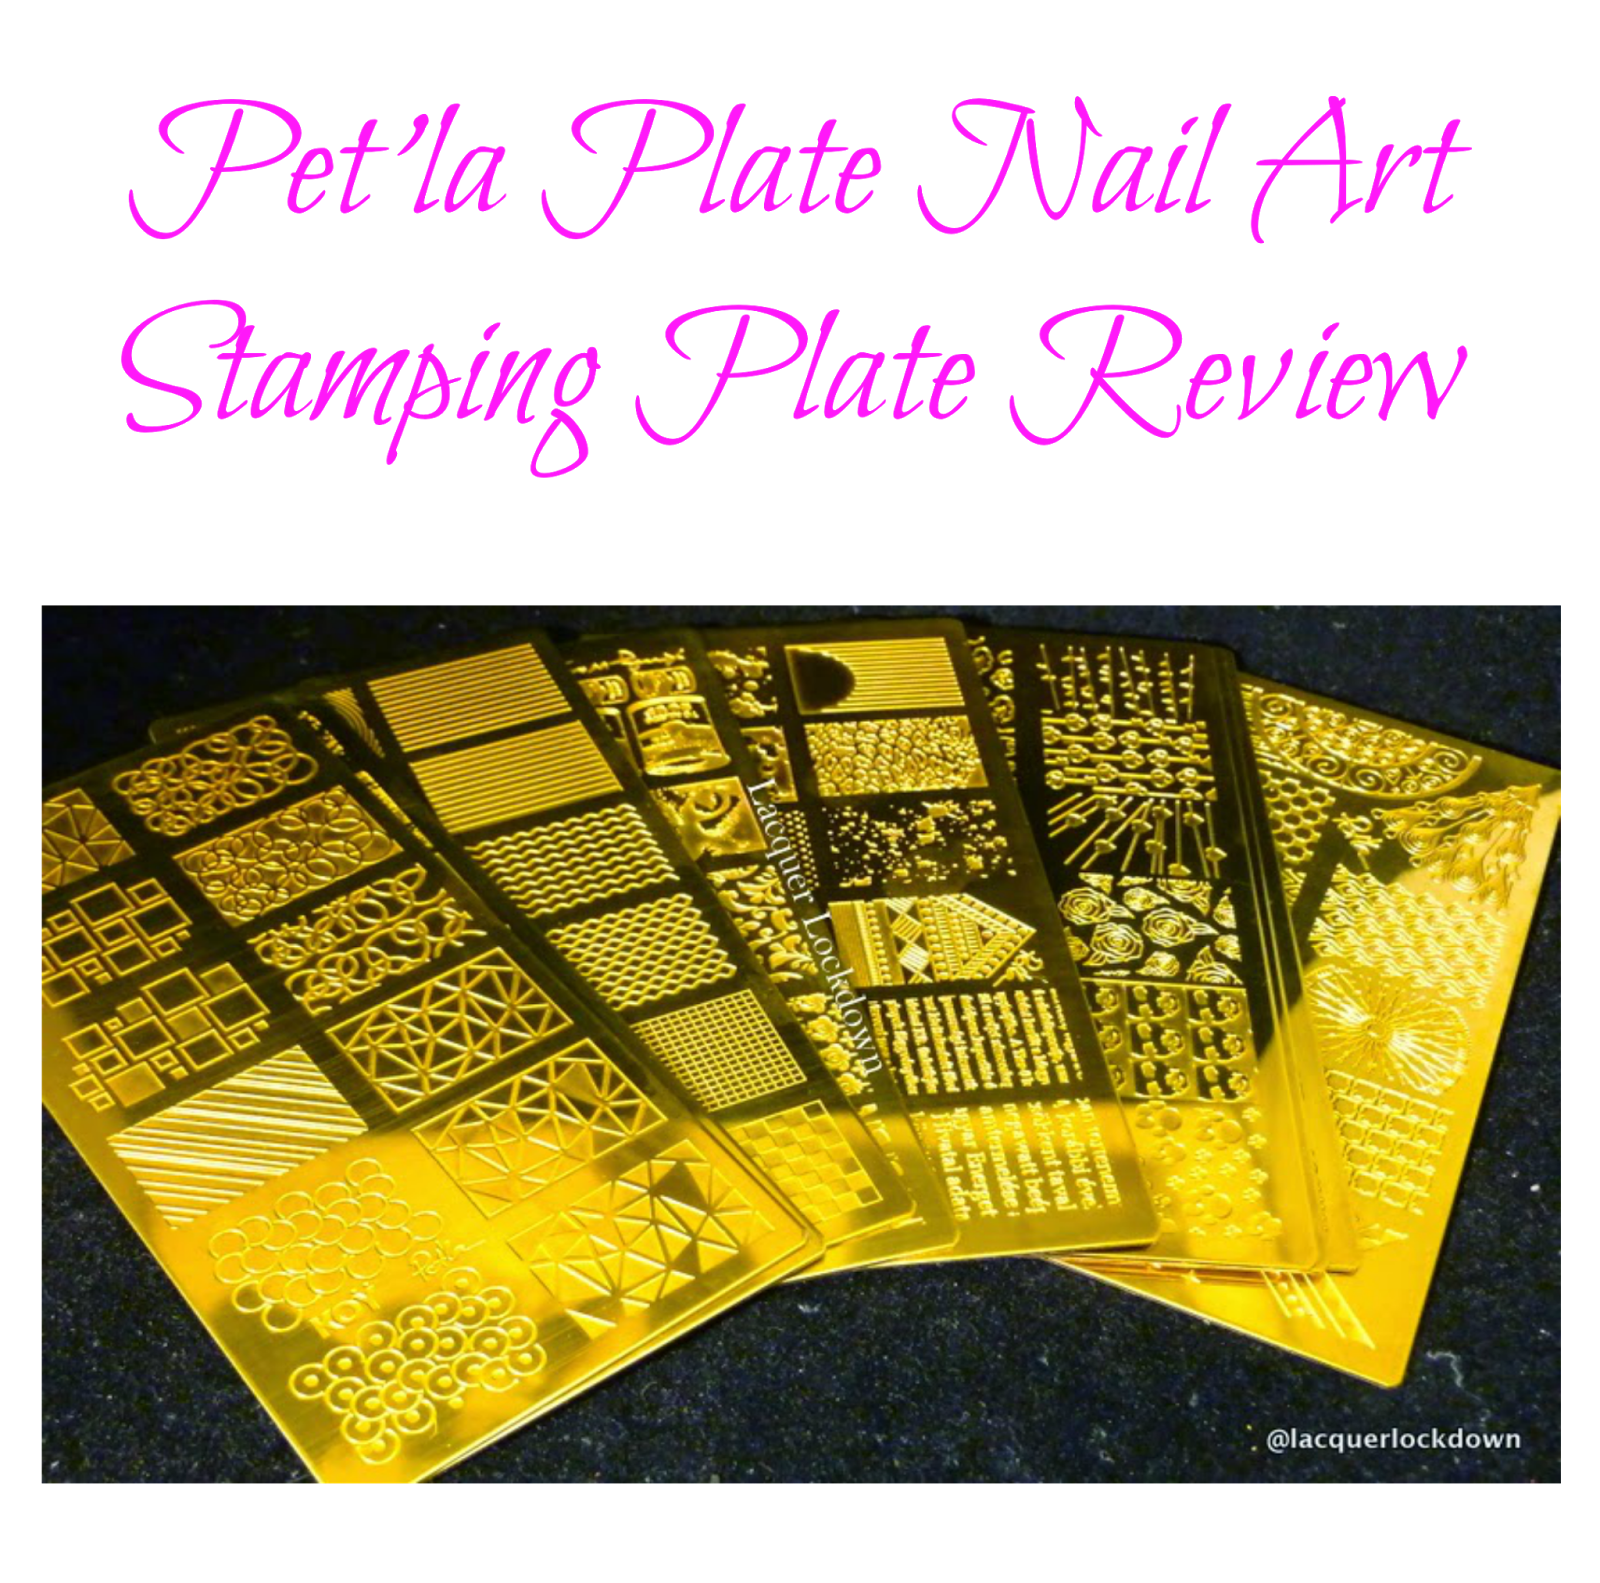 Lacquer Lockdown - Petla Plate, Pet'la Plate, nail art stamping plates, nail art stamping blog, petla plate review, nail art stamping plate review, nail art, diy nail art, stamping